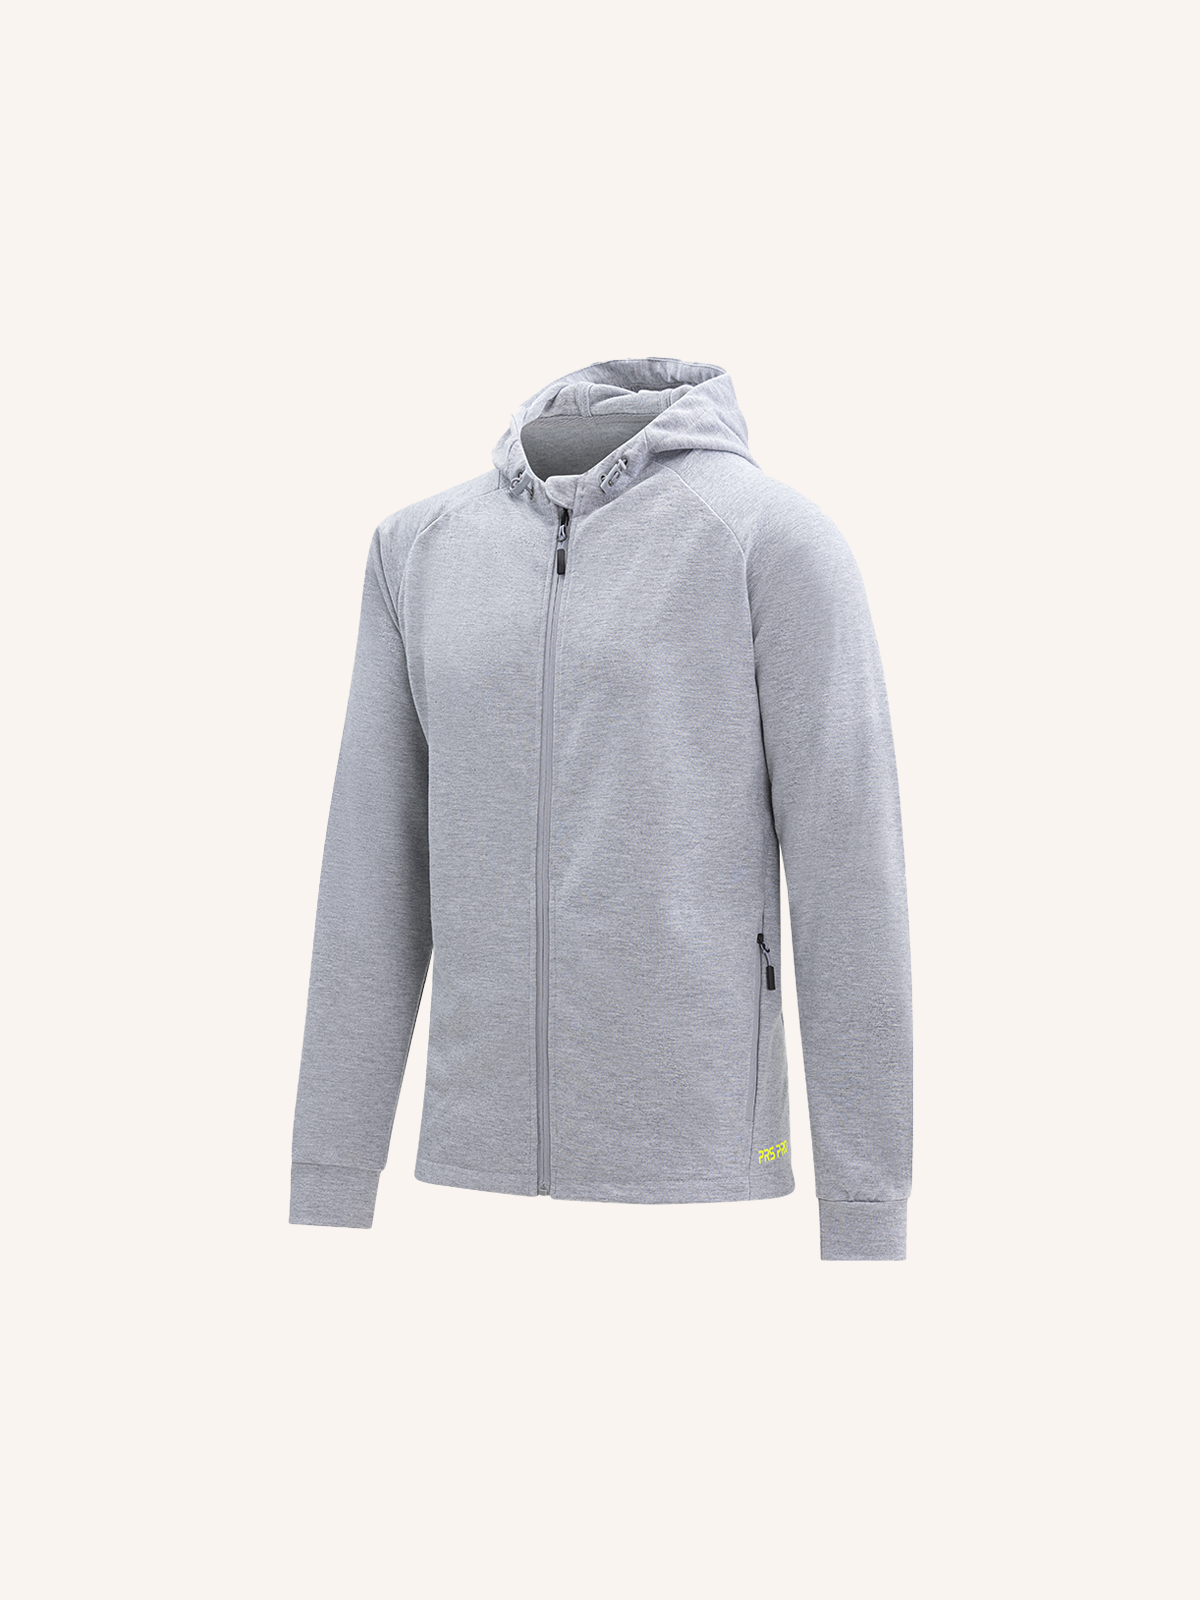 Full Zip Sweatshirt with Hood and Zip Pocket for Men | Plain Color | Single Pack | PRS 102